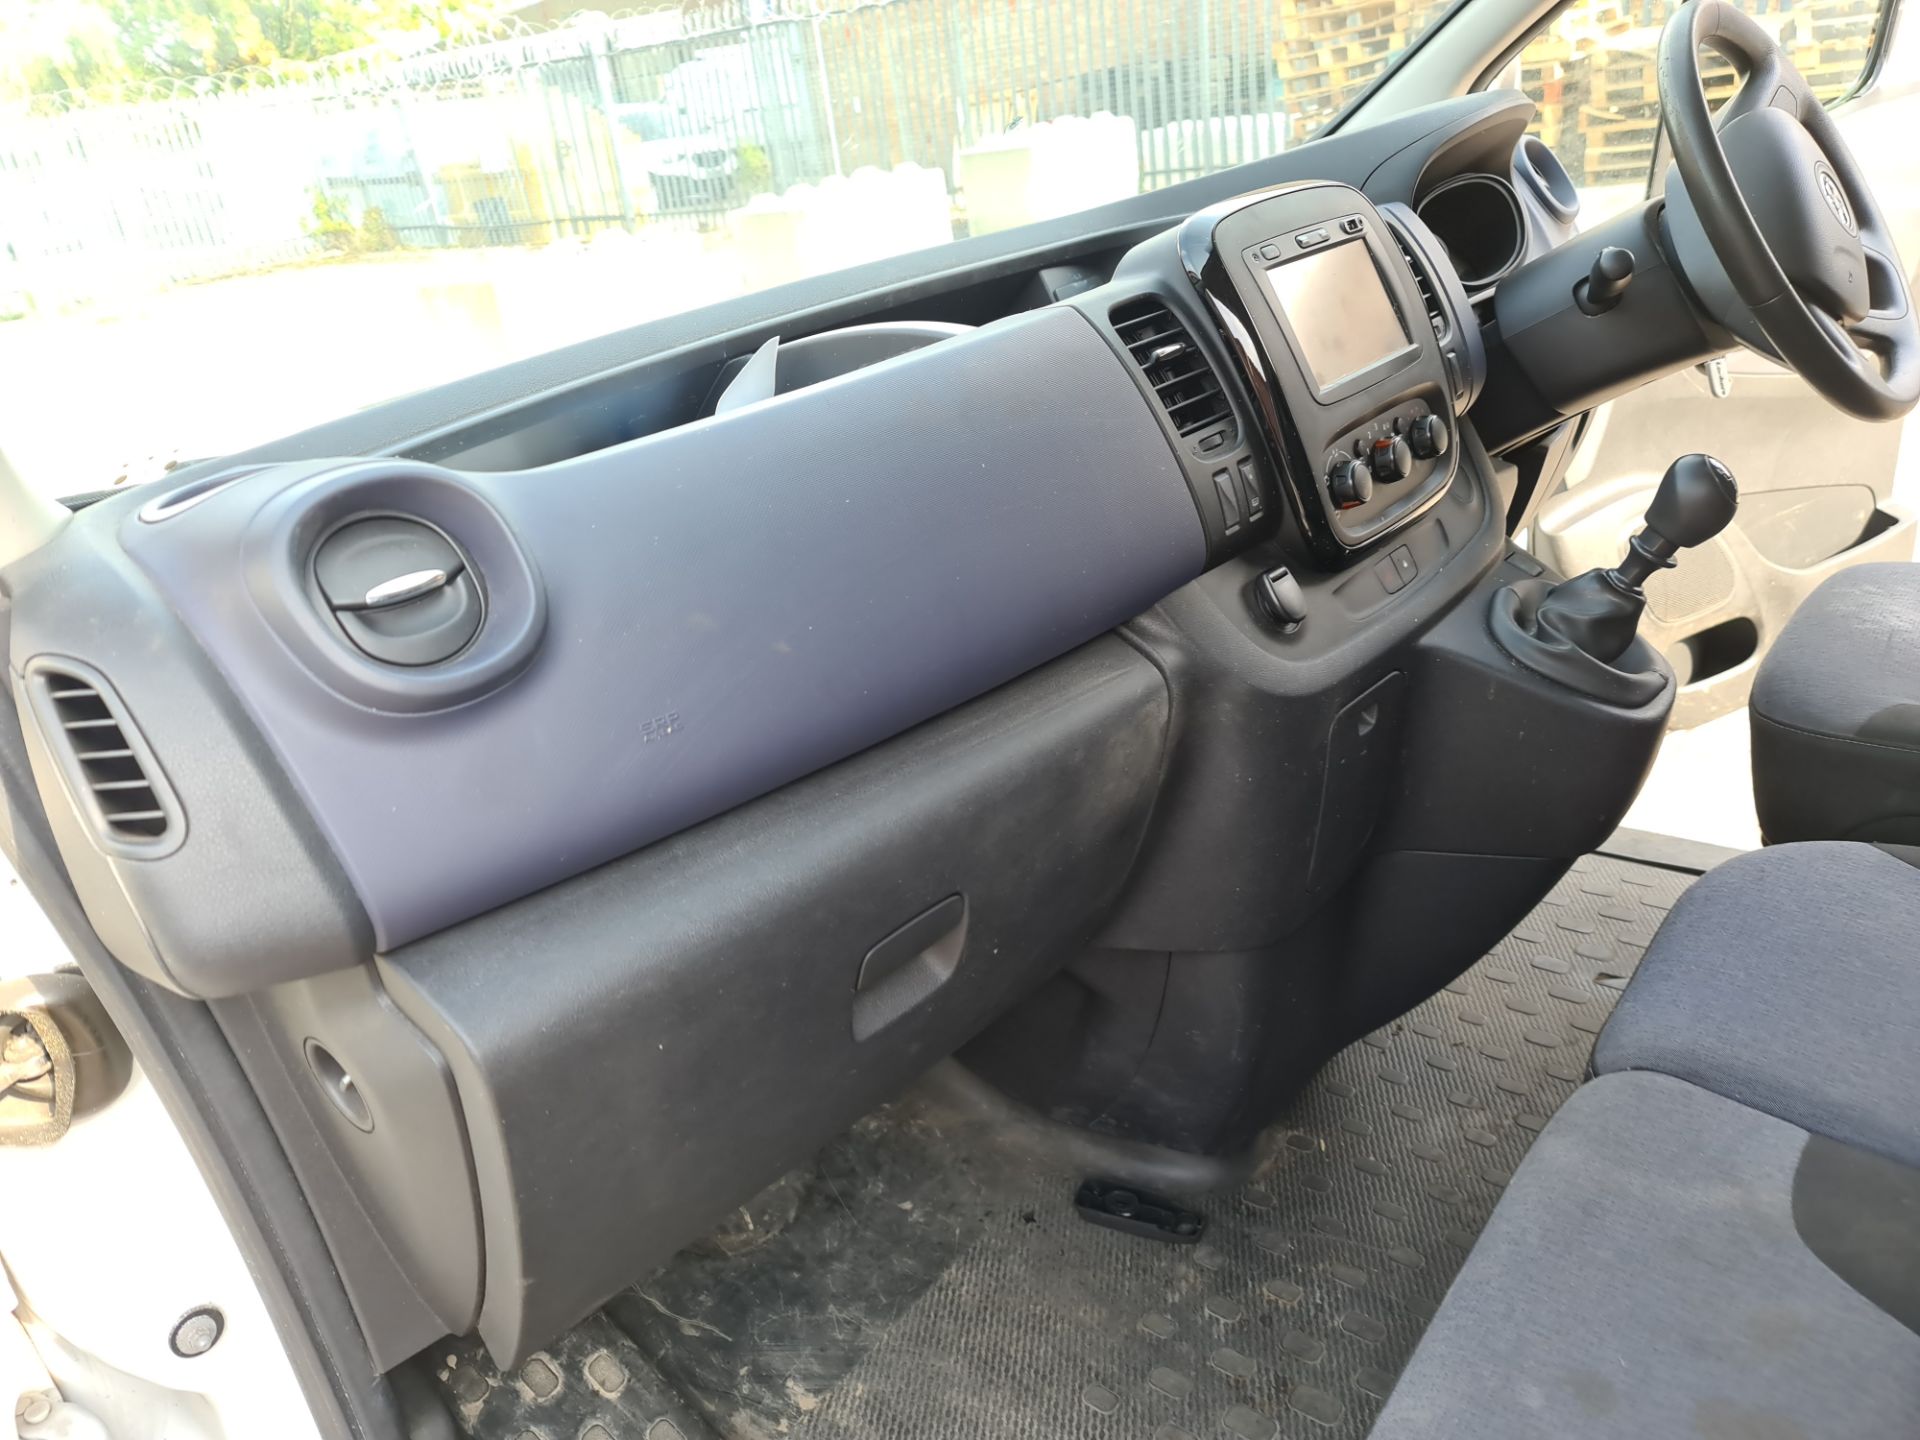 VX17 UOL Vauxhall Vivaro 2900 CDTI panel van, 6-speed manual gearbox, 1598cc diesel engine. Colour: - Image 48 of 49